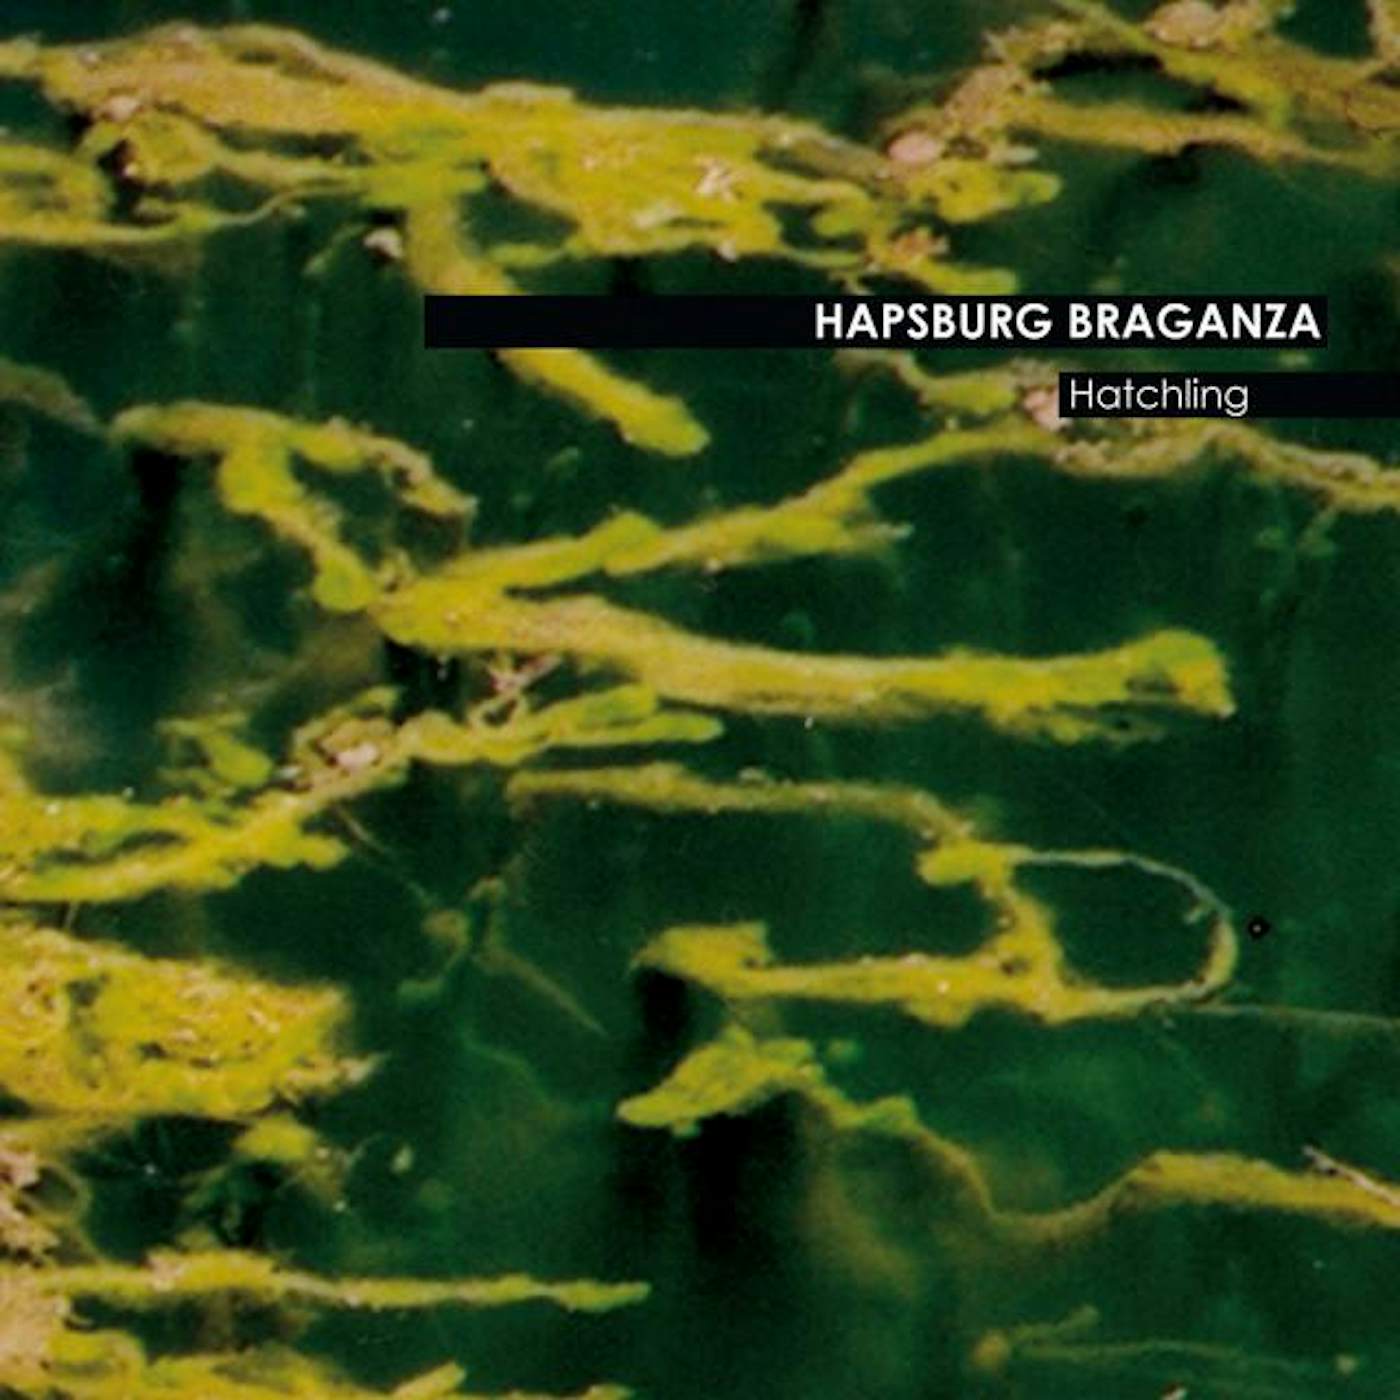 Hapsburg Braganza